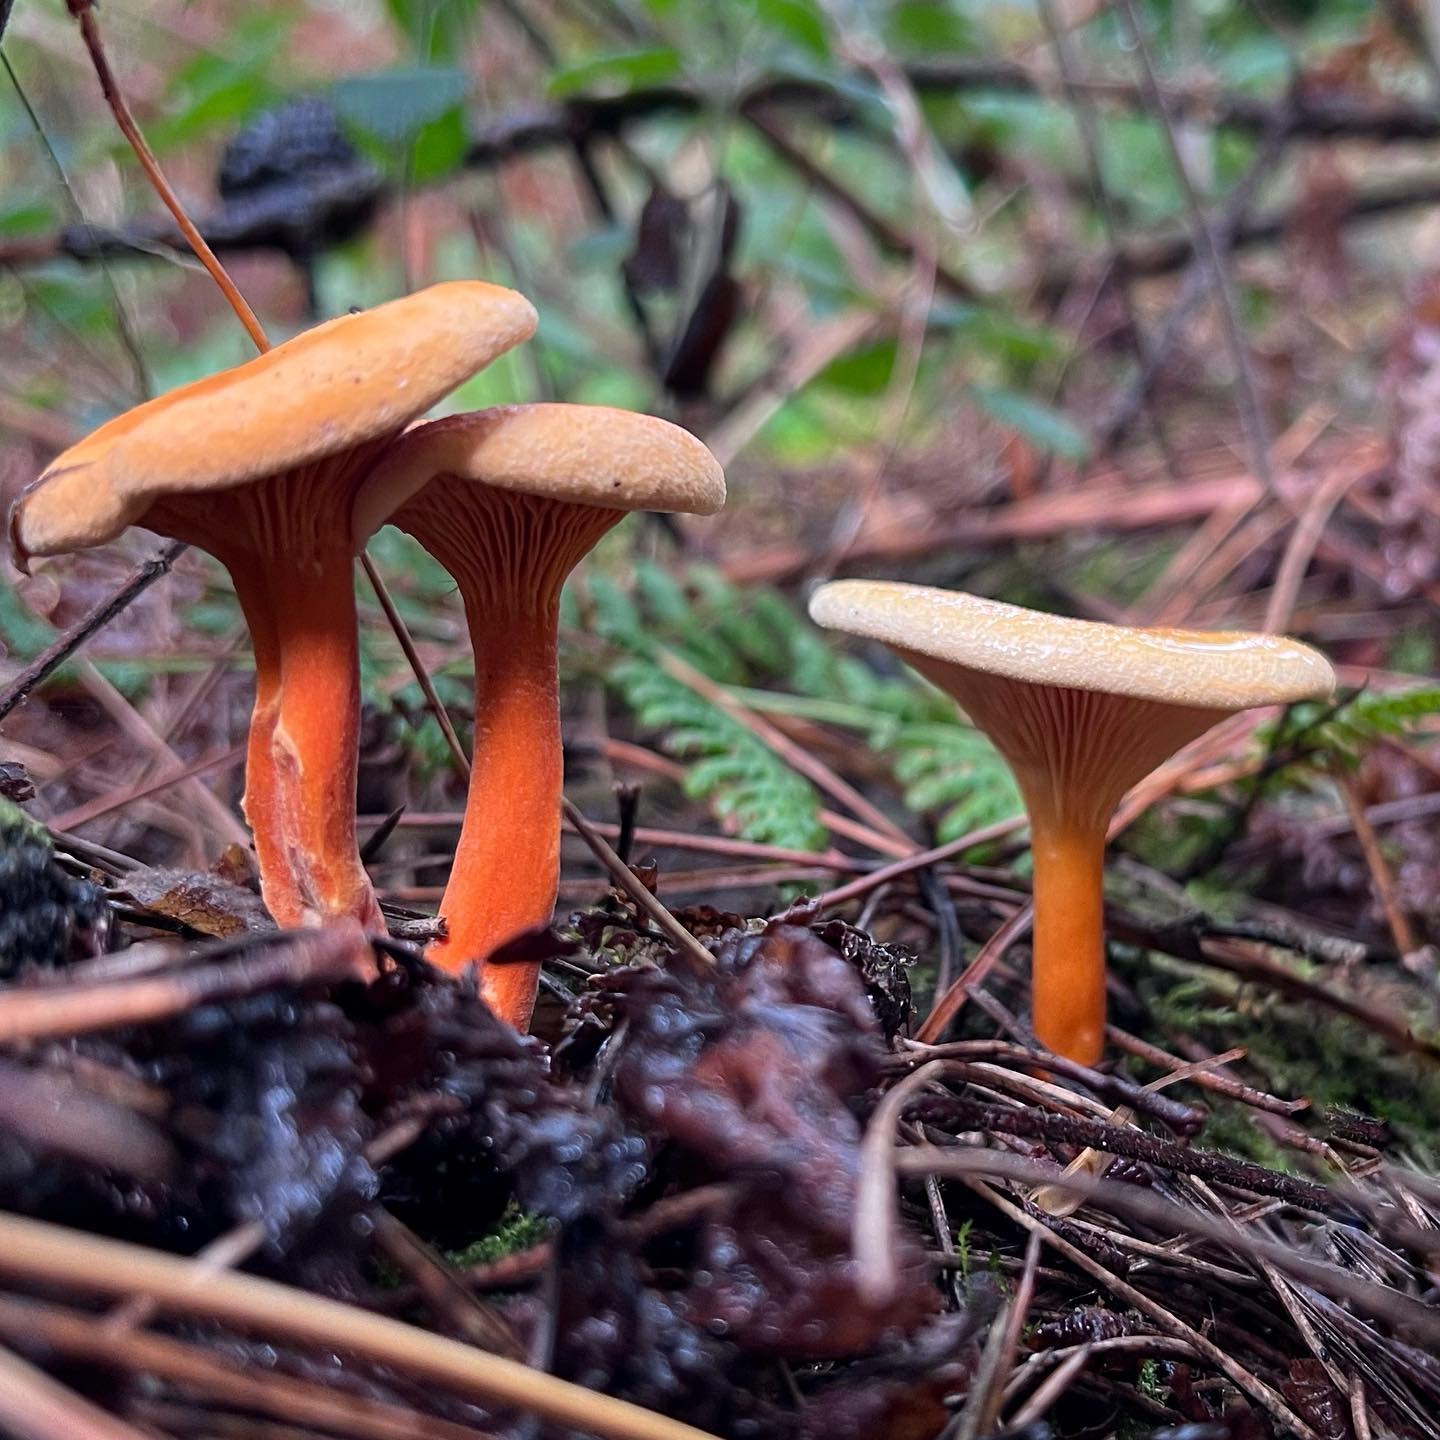 Three’s a crowd unless you are a mushroom 
——
#bbcmidlands #igersbirminghamuk #mushrooms #haywood #forrestryengland #mushrooms #everything_imaginable #ukpotd #forest #forestfocus🌳🌲